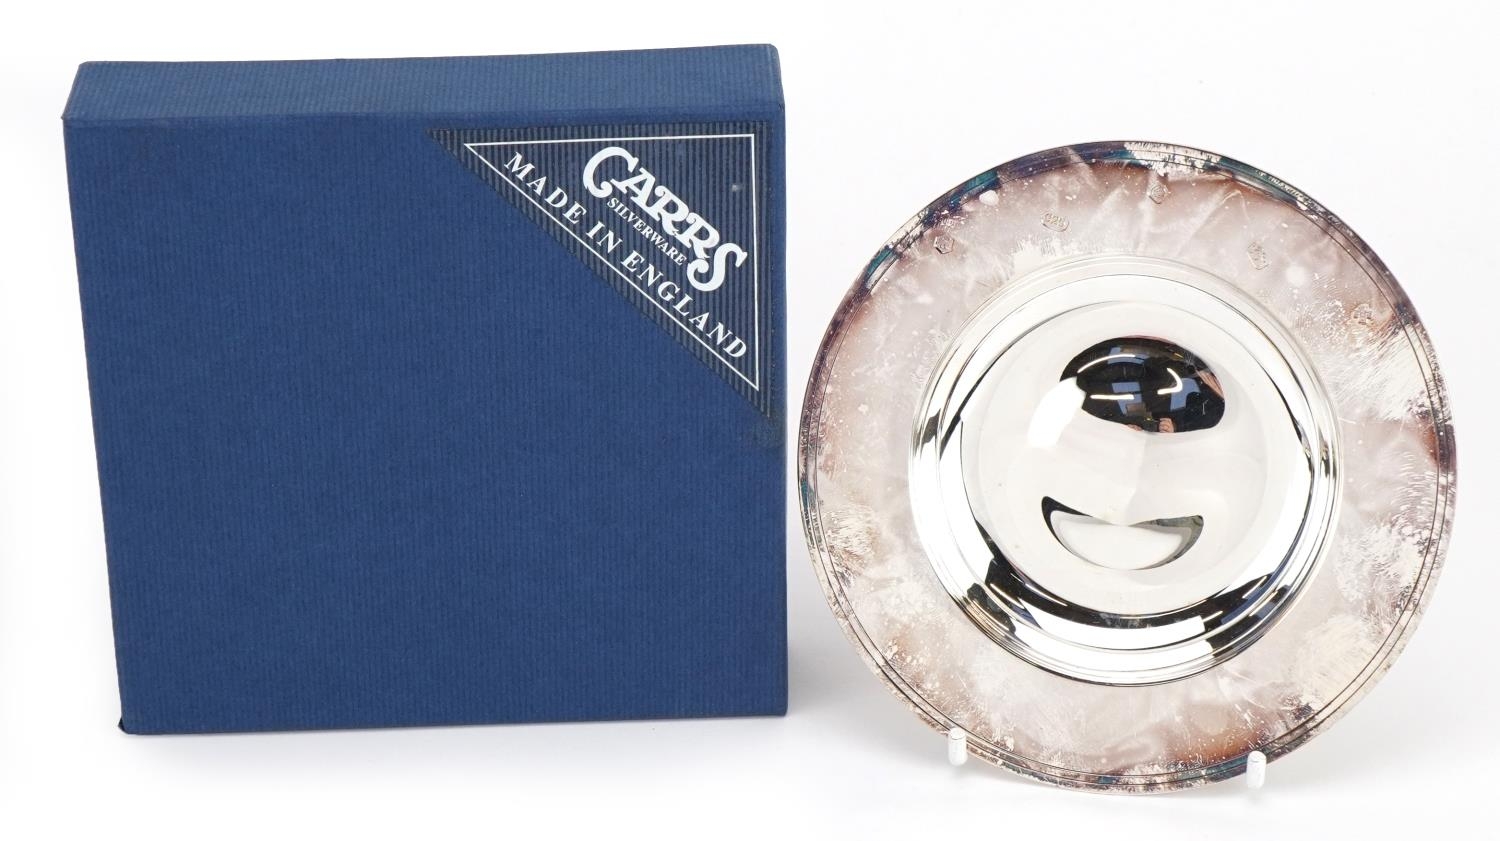 Carrs of Sheffield Ltd, Elizabeth II circular silver dish with booklet and box, Sheffield 2000, 12.